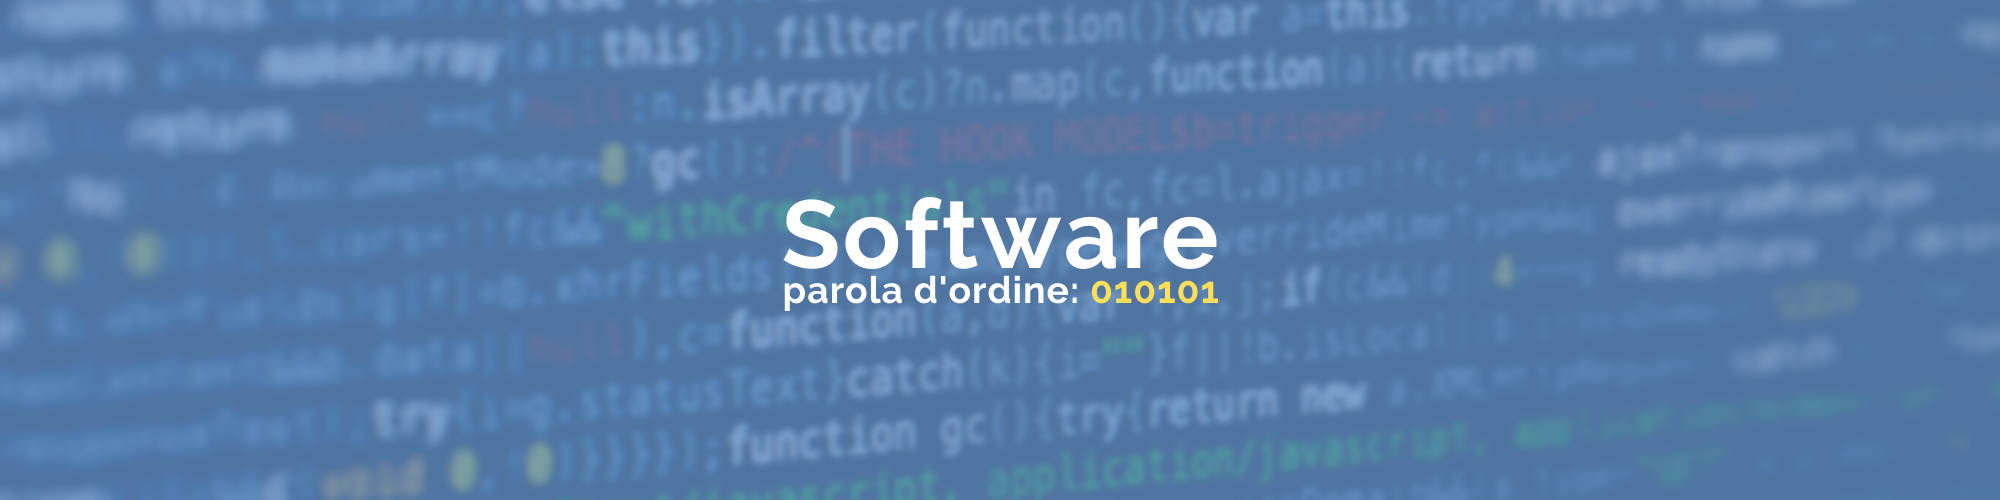 banner servizi software